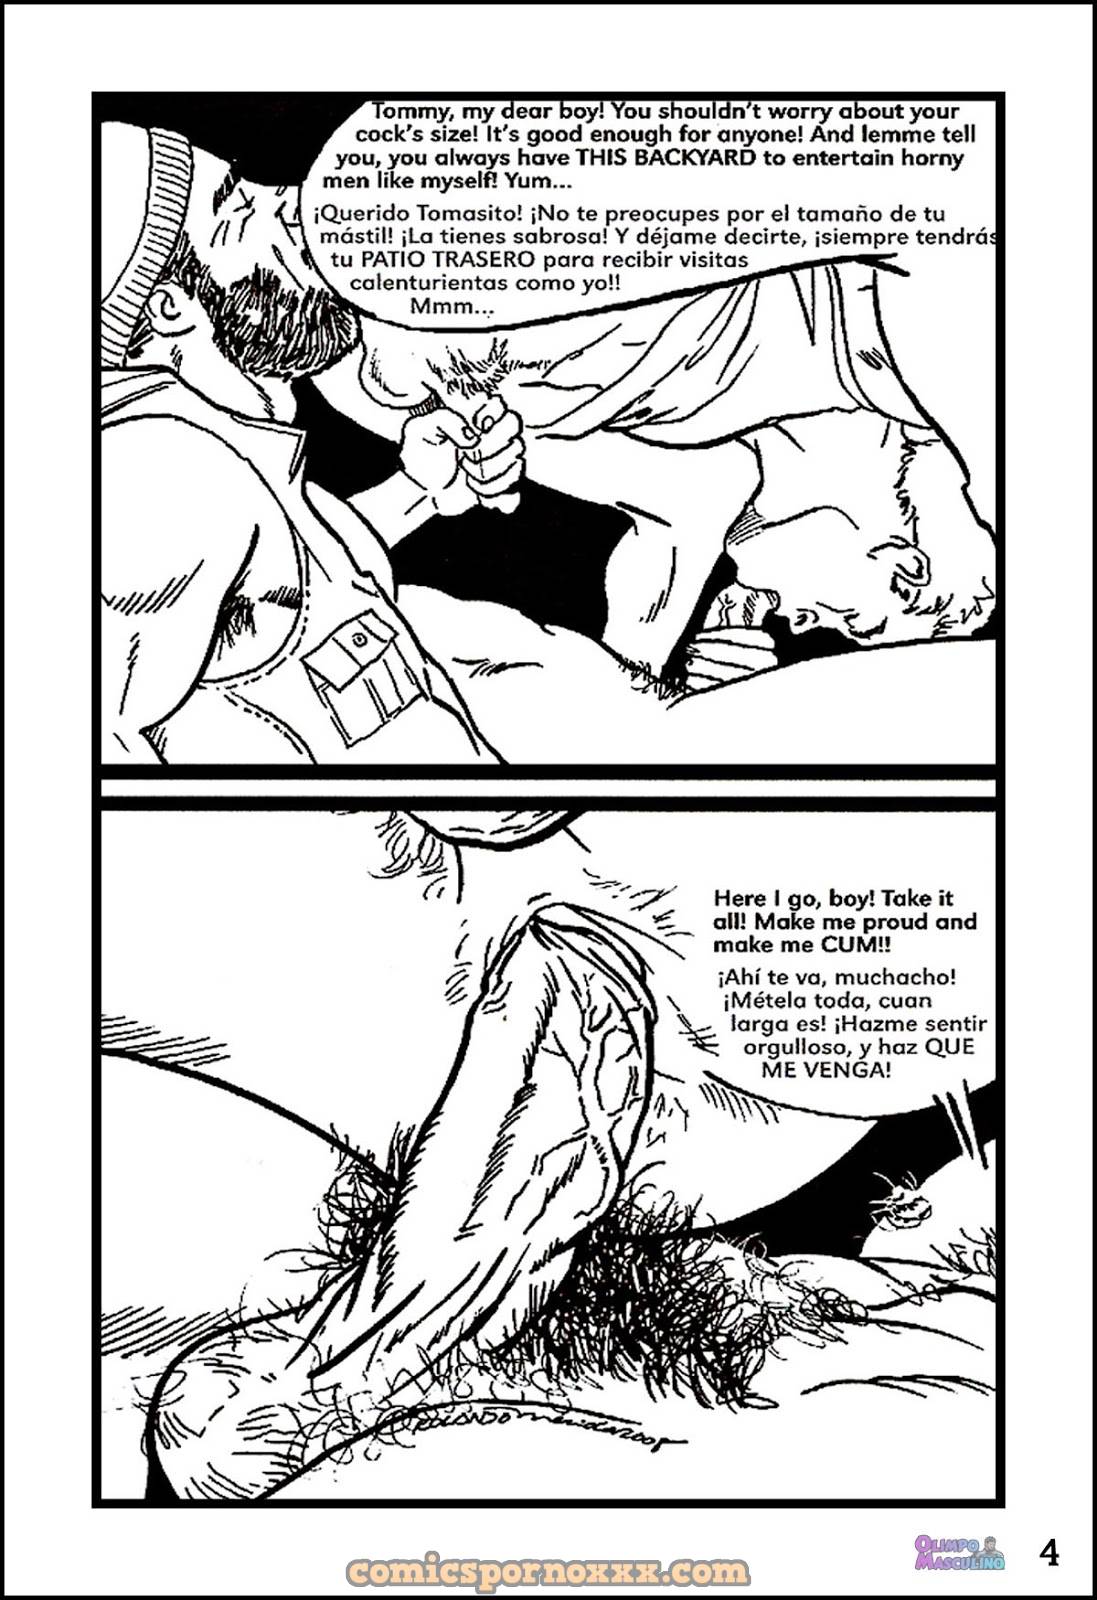 The Backyard (En el Patio de Atras) - 4 - Comics Porno - Hentai Manga - Cartoon XXX